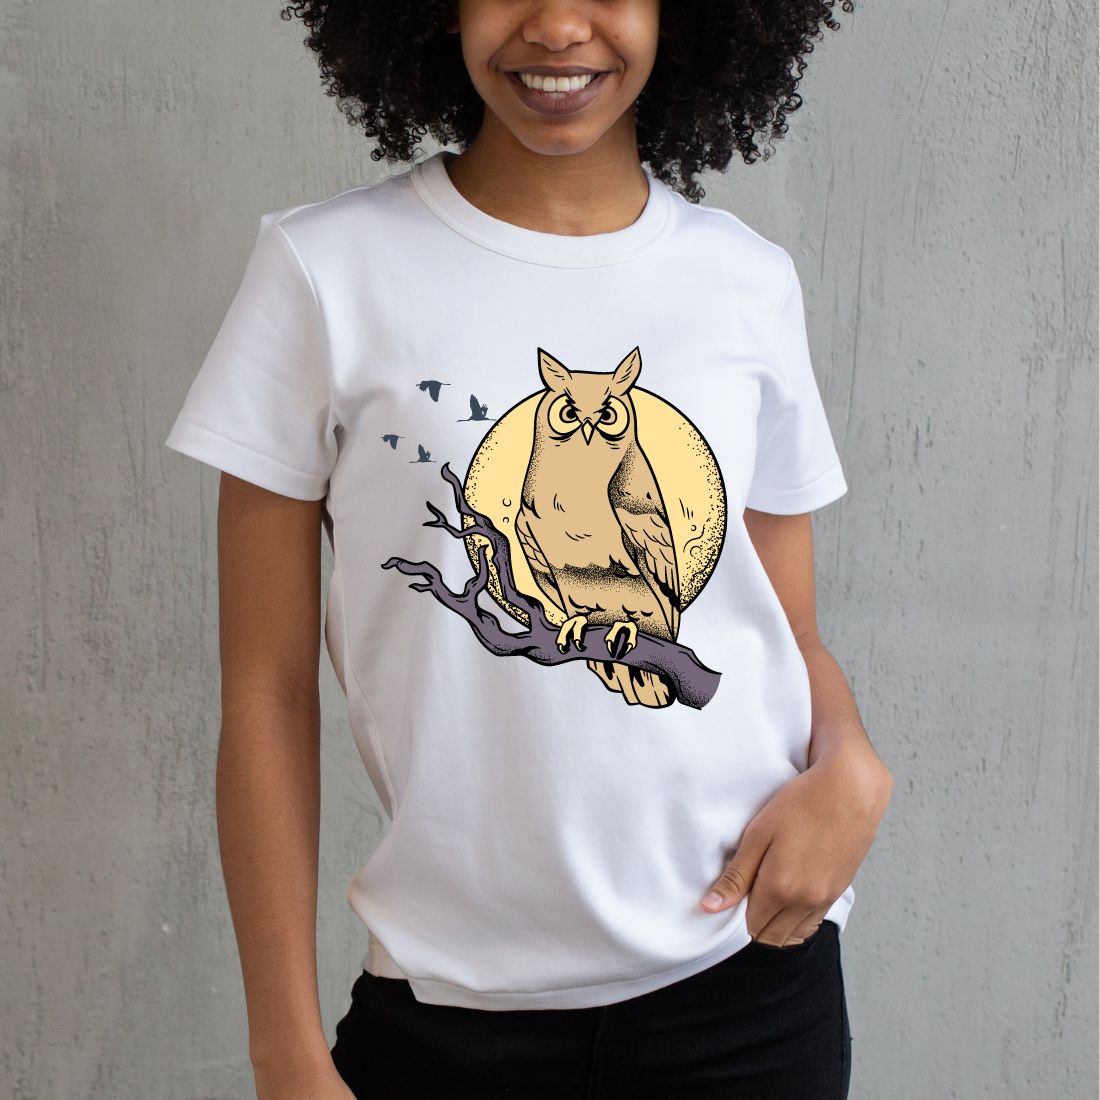 Owl t shirt design preview image.